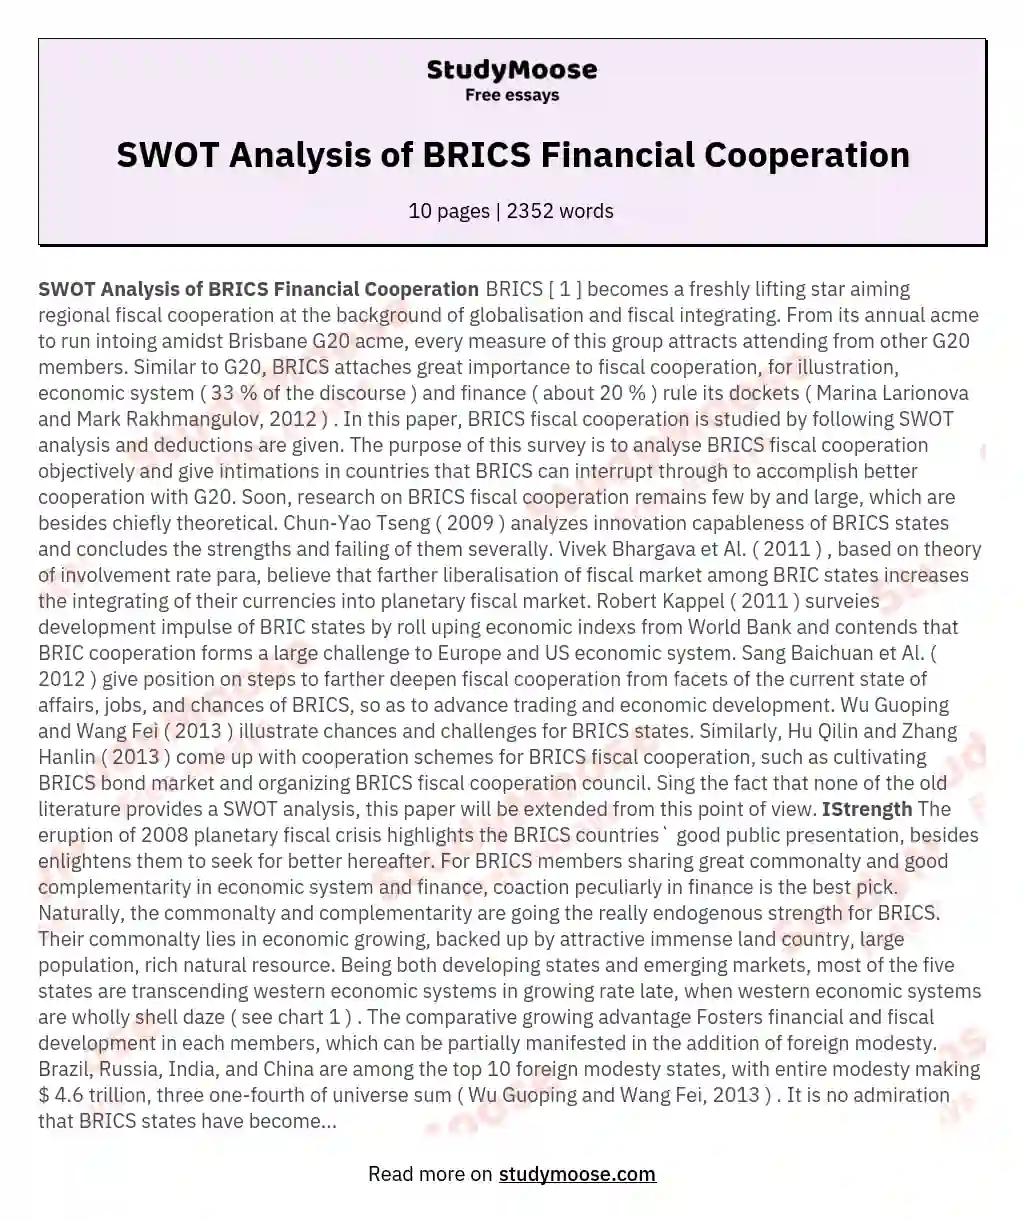 SWOT Analysis of BRICS Financial Cooperation essay